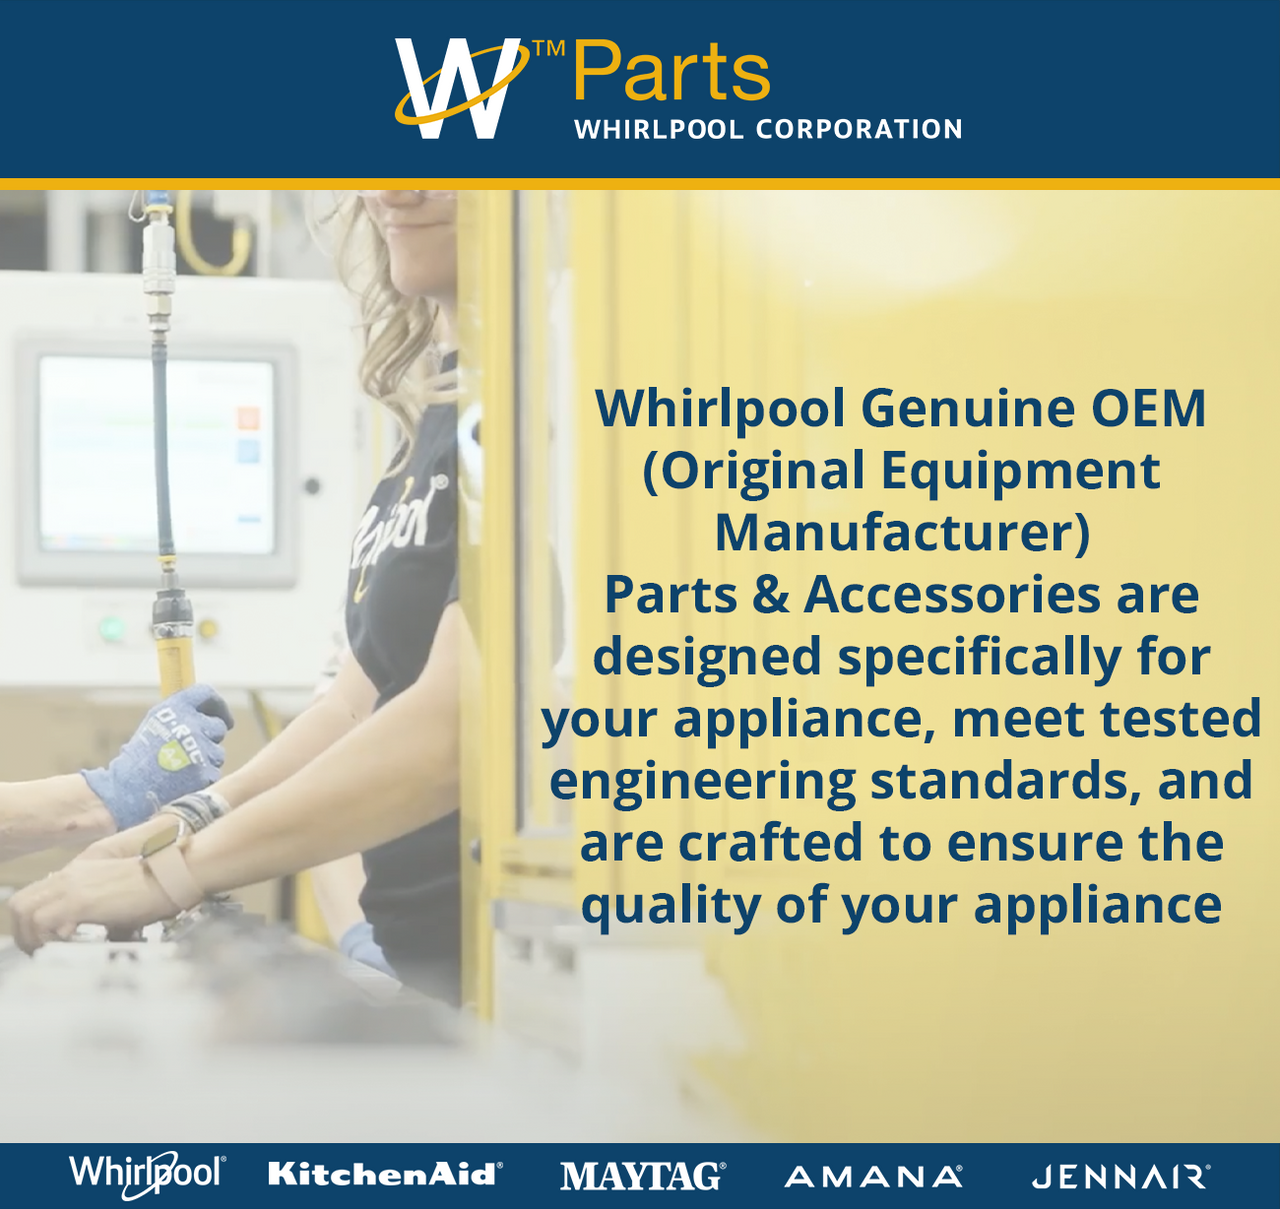 Whirlpool W10250743A - Washer Detergent Dispenser - Whirlpool Genuine Part Badge